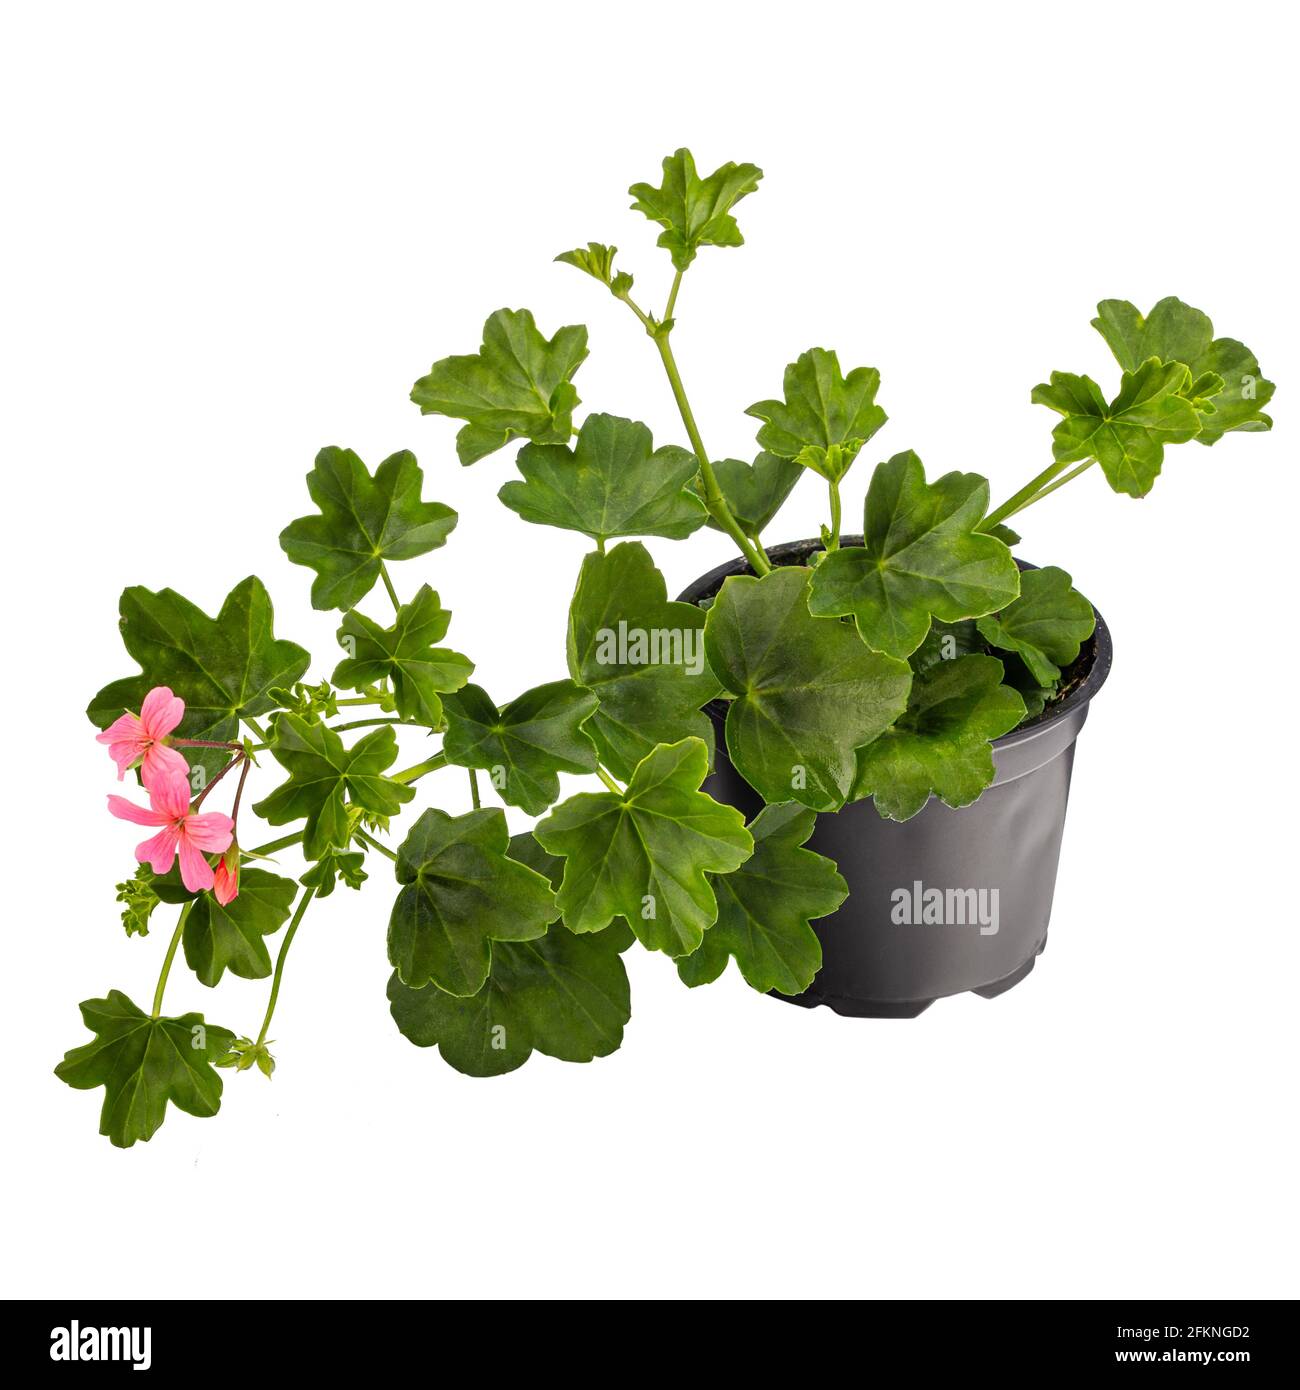 Potted ivy geranium or cascading geranium Pelargonium peltatum isolated on white background Stock Photo